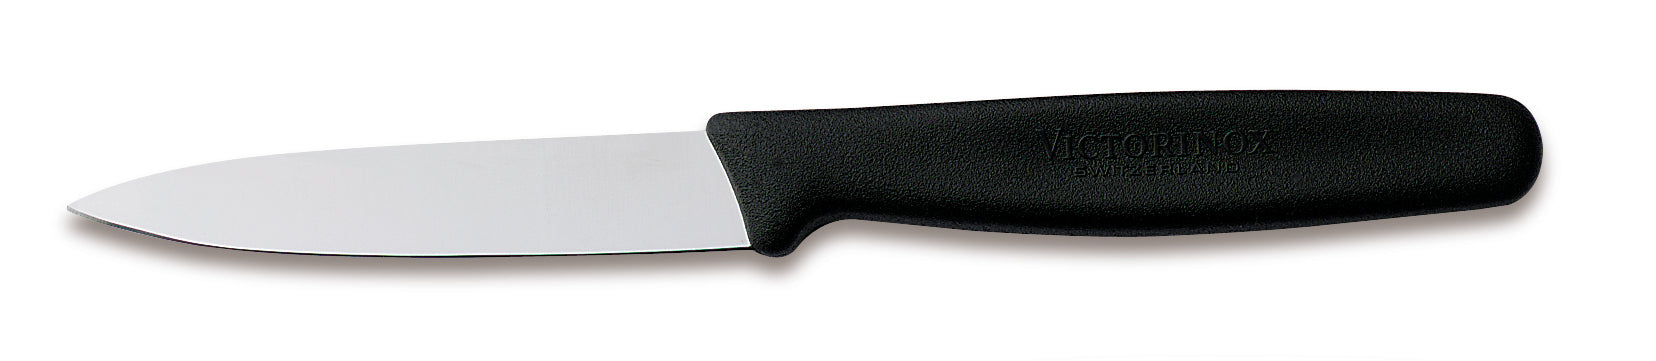 8cm paring knife